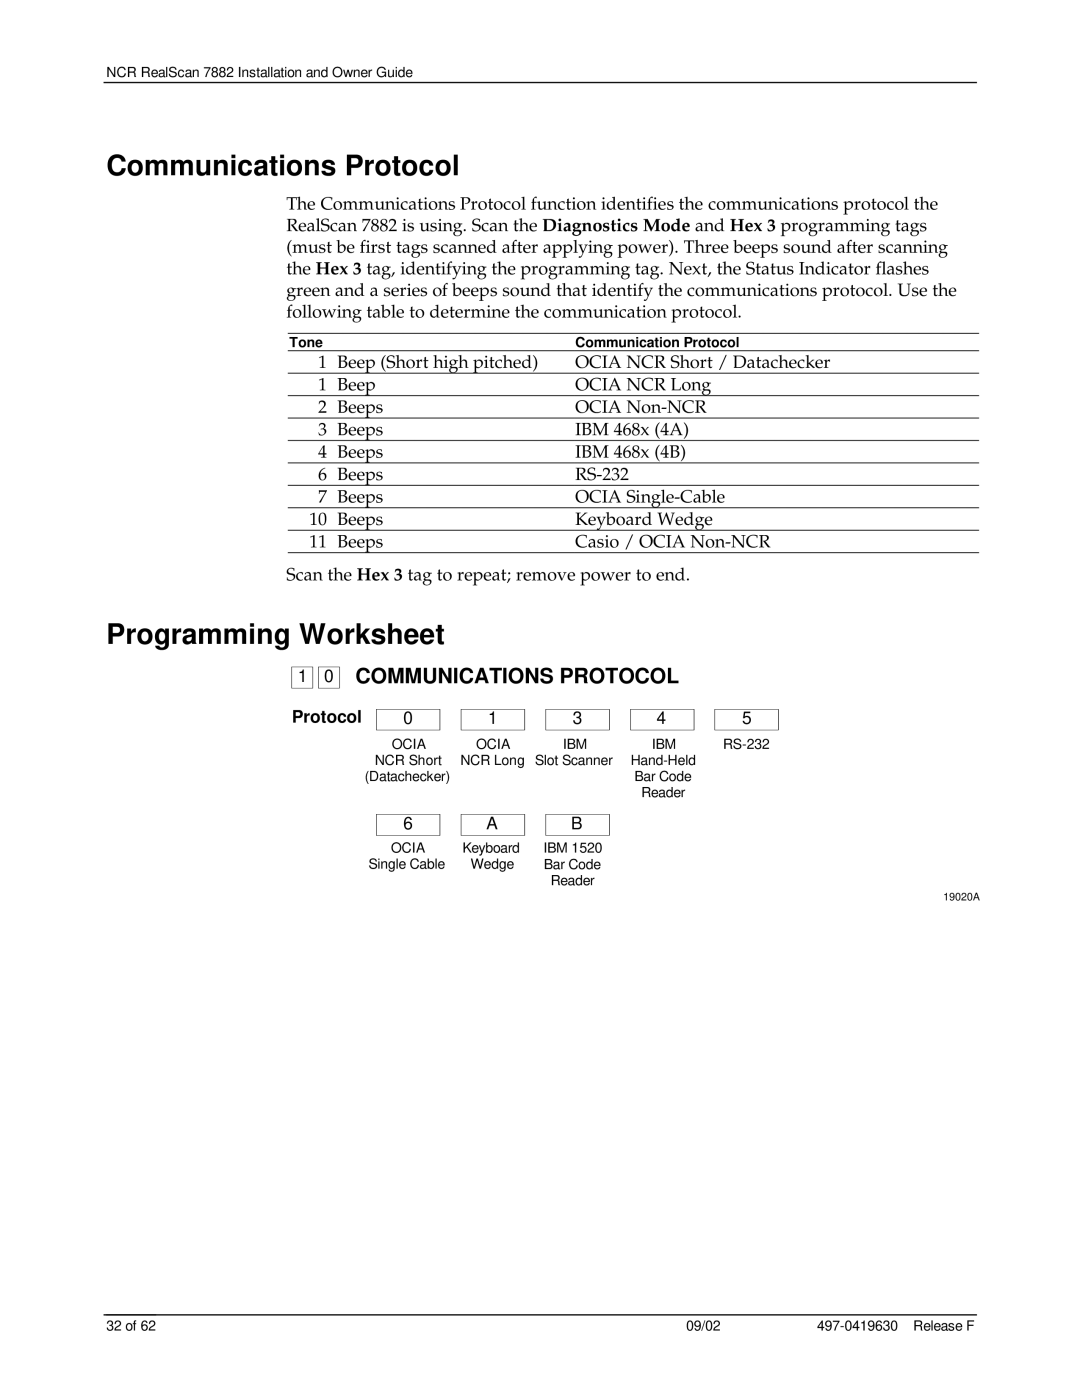 NCR 7882 manual Communications Protocol, Programming Worksheet, 1 0 COMMUNICATIONS PROTOCOL 